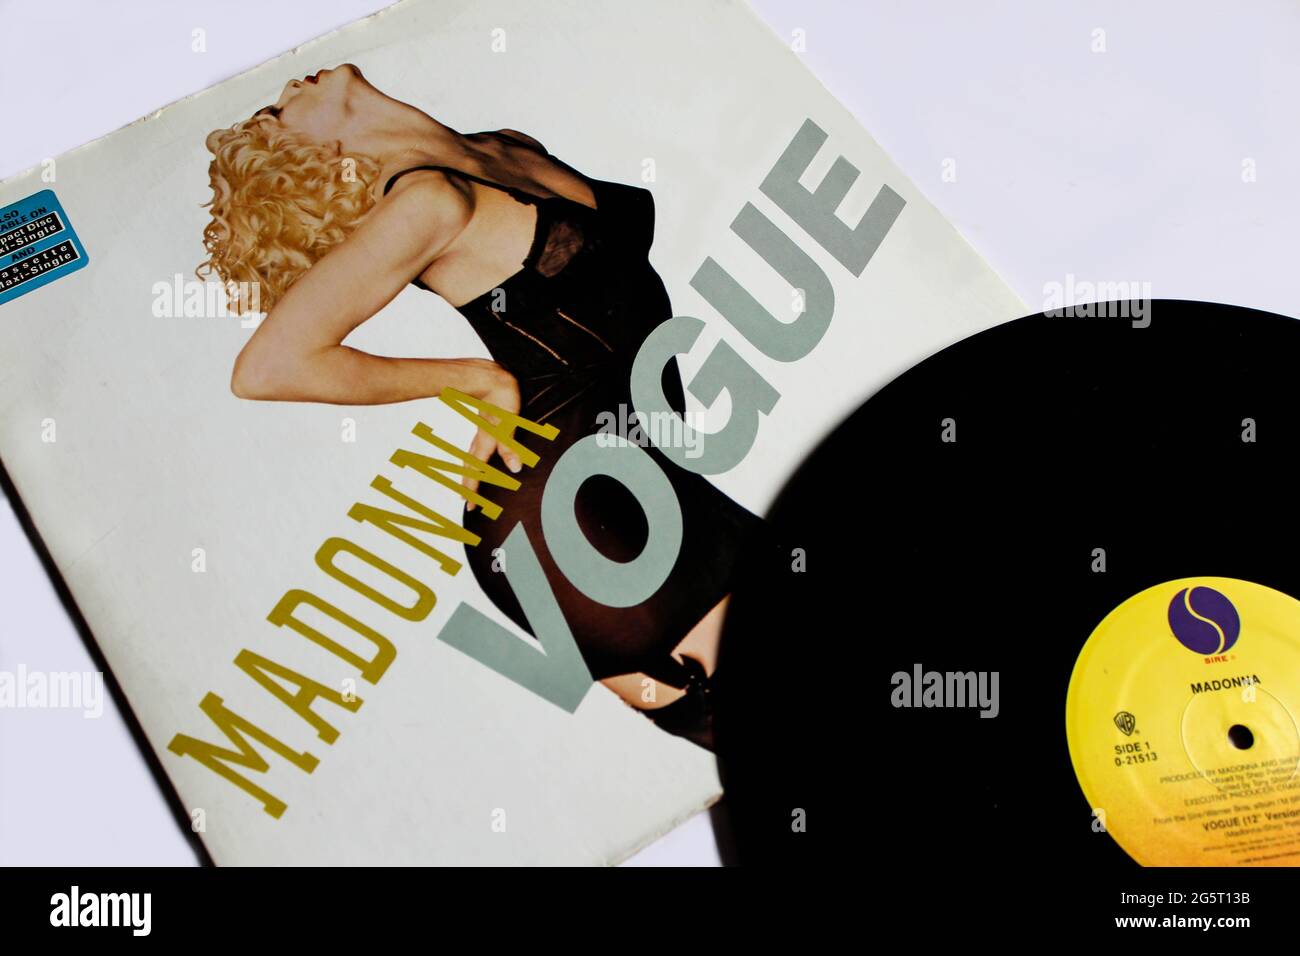 House dance artist, Madonna single music album on vinyl record LP disc. Titled: Vogue from the album I'm Breathless album cover Stock Photo